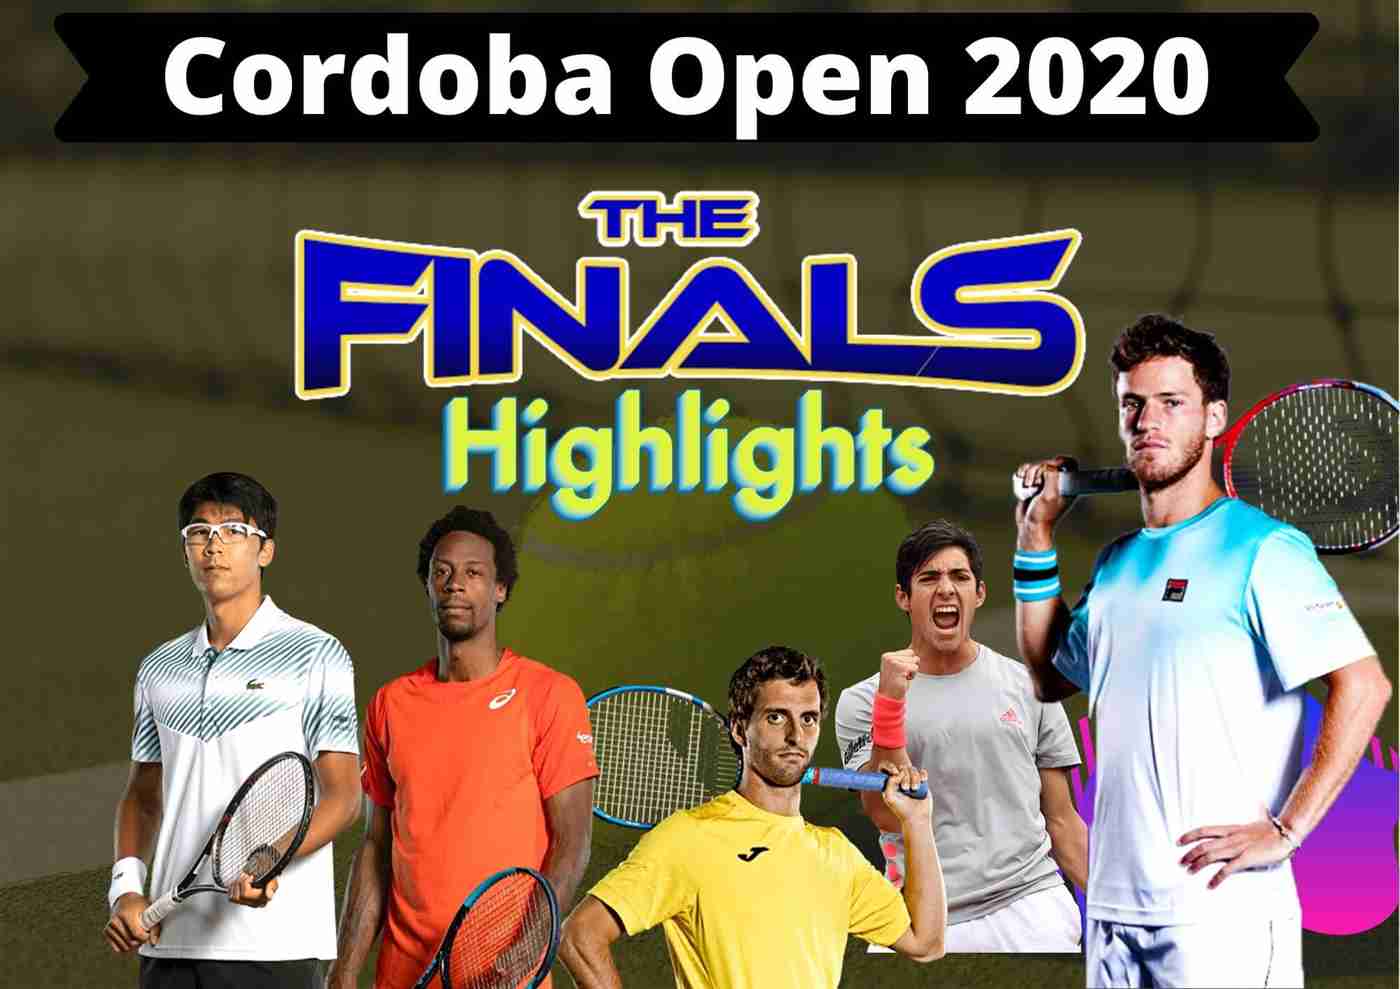 D Schwartzman Vs C Garin Final Highlights 2020 Cordoba Open